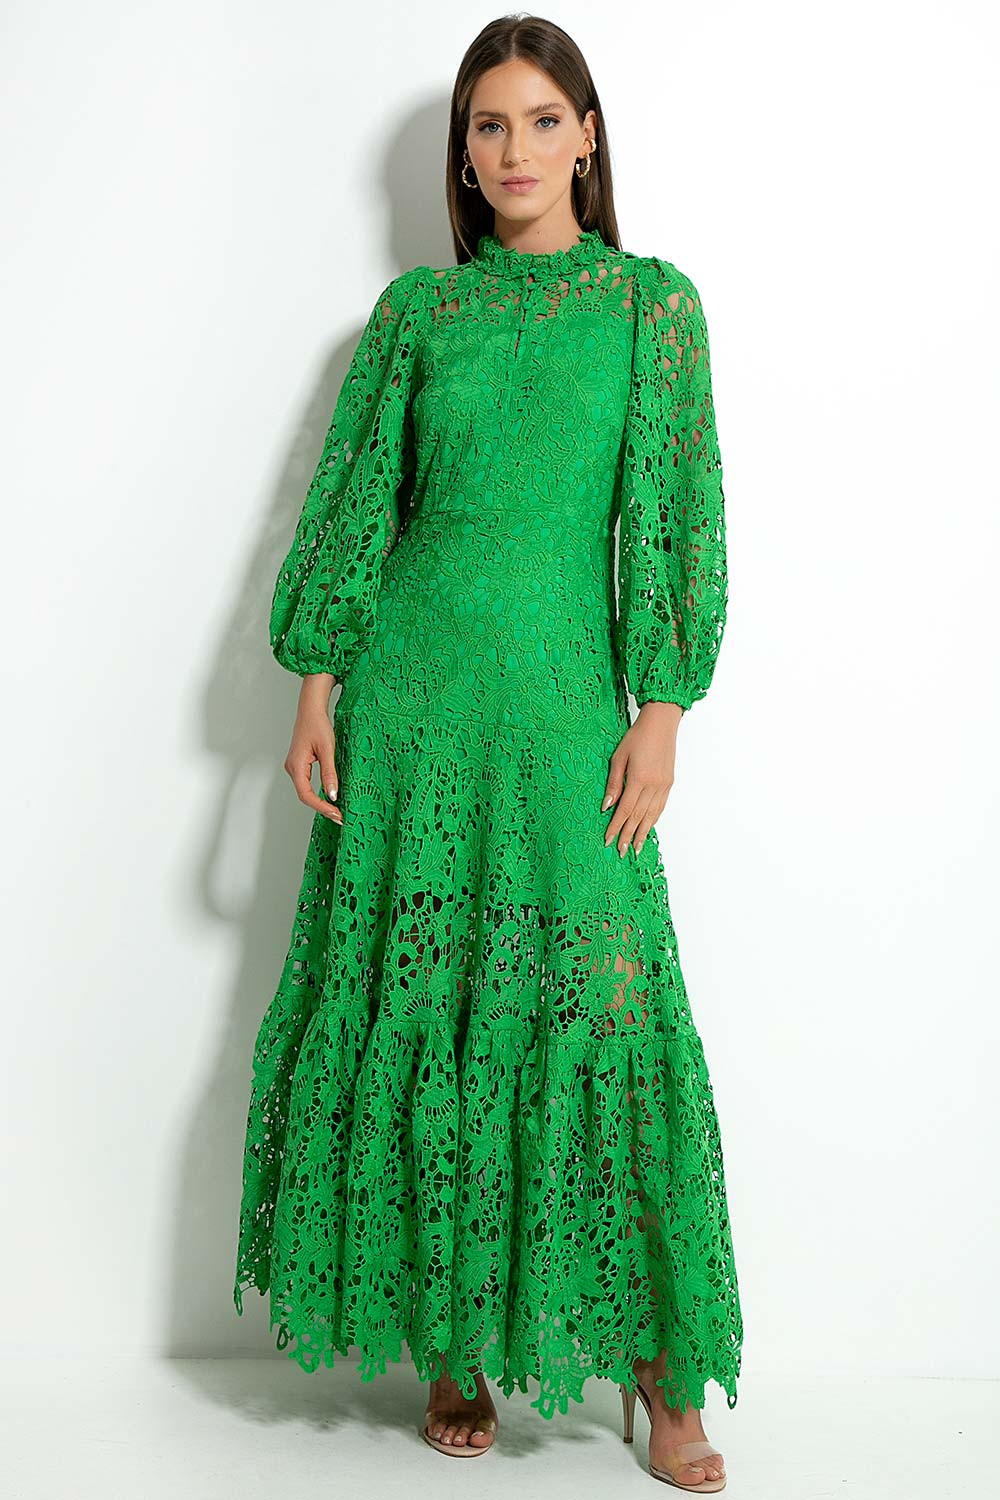 Vestido Renda Maia Verde promo - Garden Store